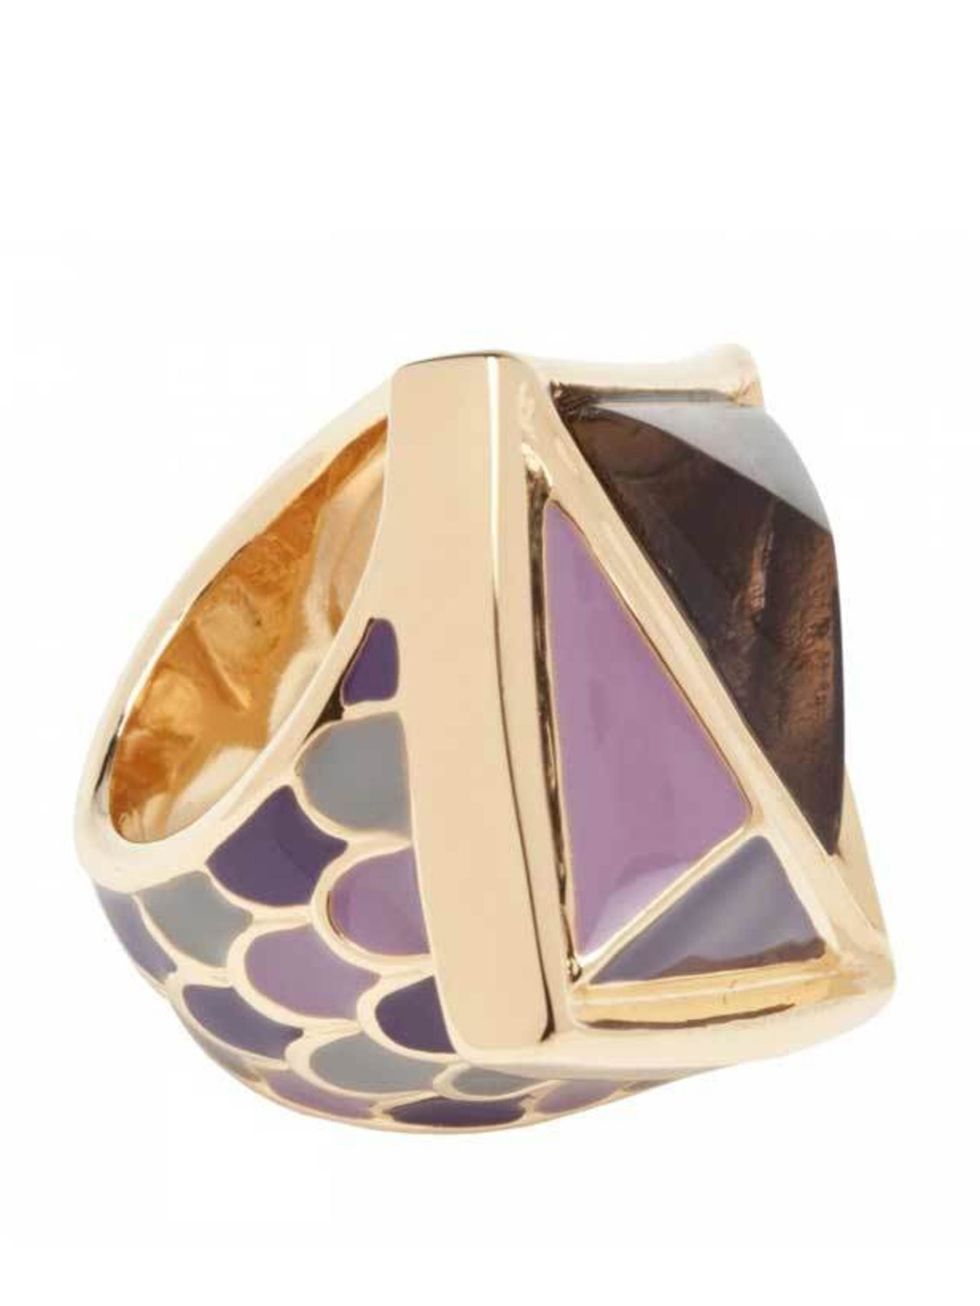 <p>Kara Ross dragon scale putty ring, £155, at <a href="http://www.harveynichols.com/womens/categories/jewellery/rings/s341588-dragon-scale-putty-ring.html?colour=GREY">Harvey Nichols</a></p>